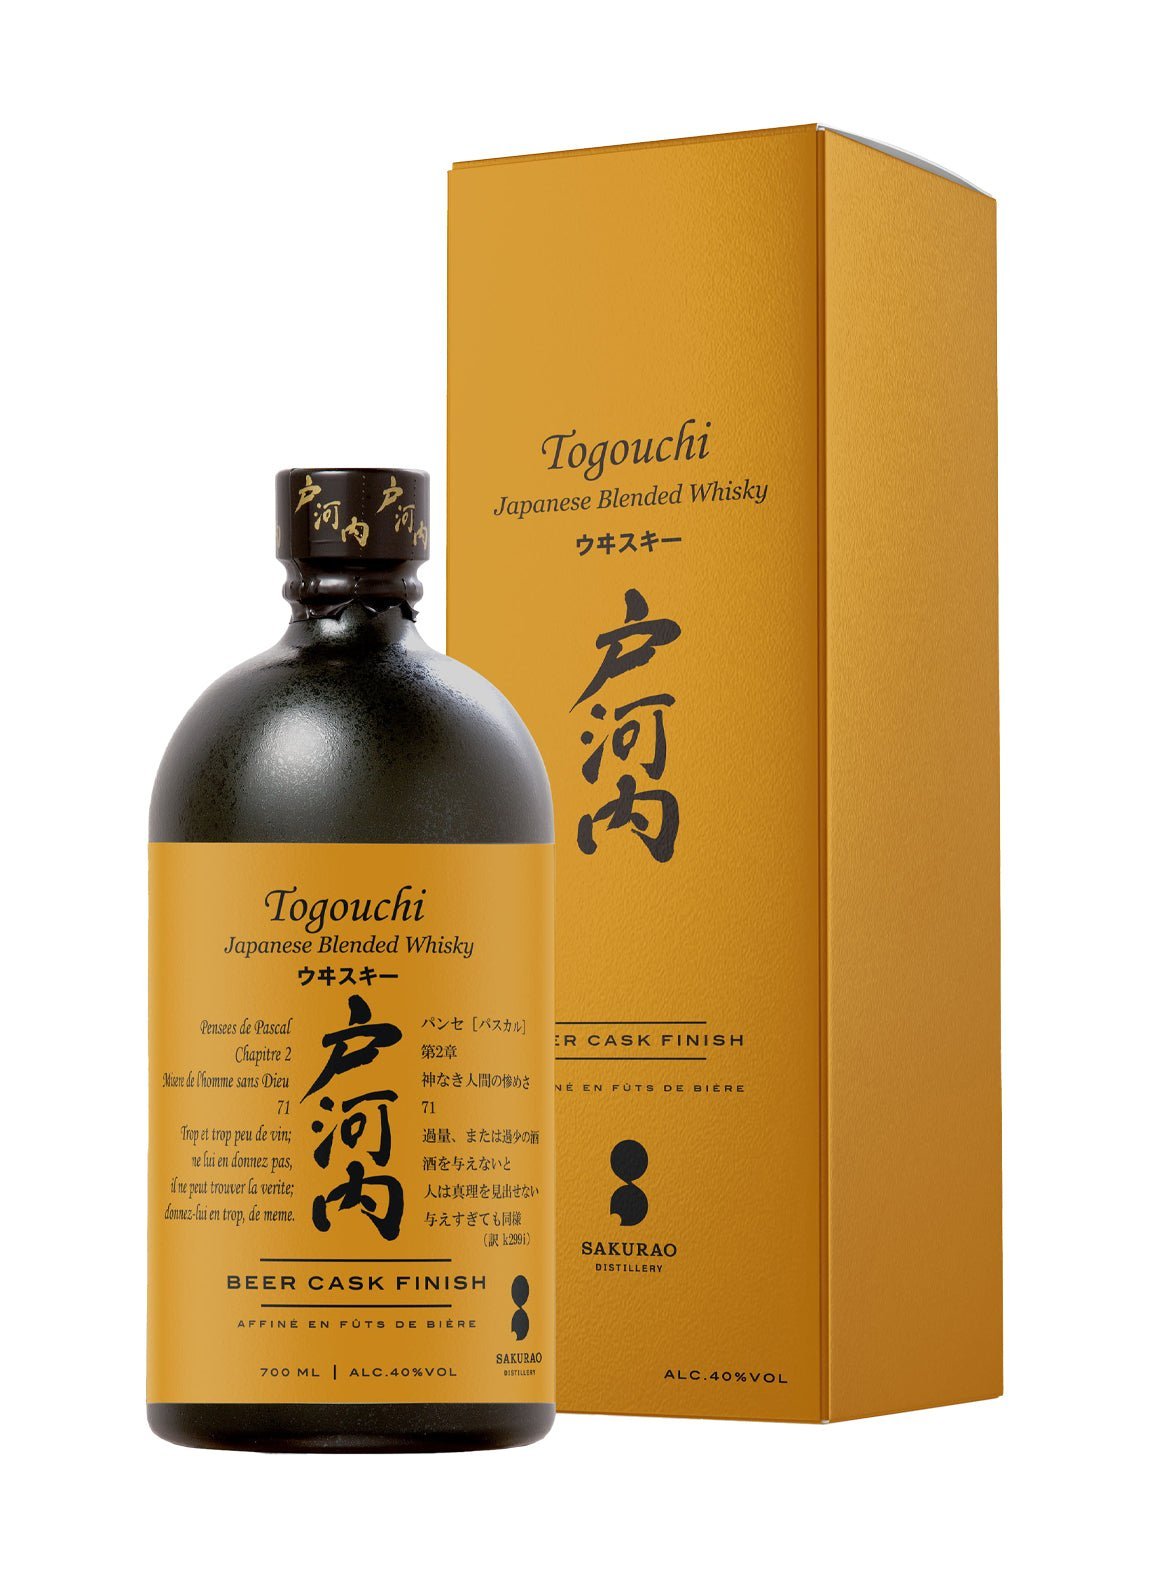 Togouchi Blended Beer Cask Finish Japanese Whisky 40% 700ml | Whiskey | Shop online at Spirits of France